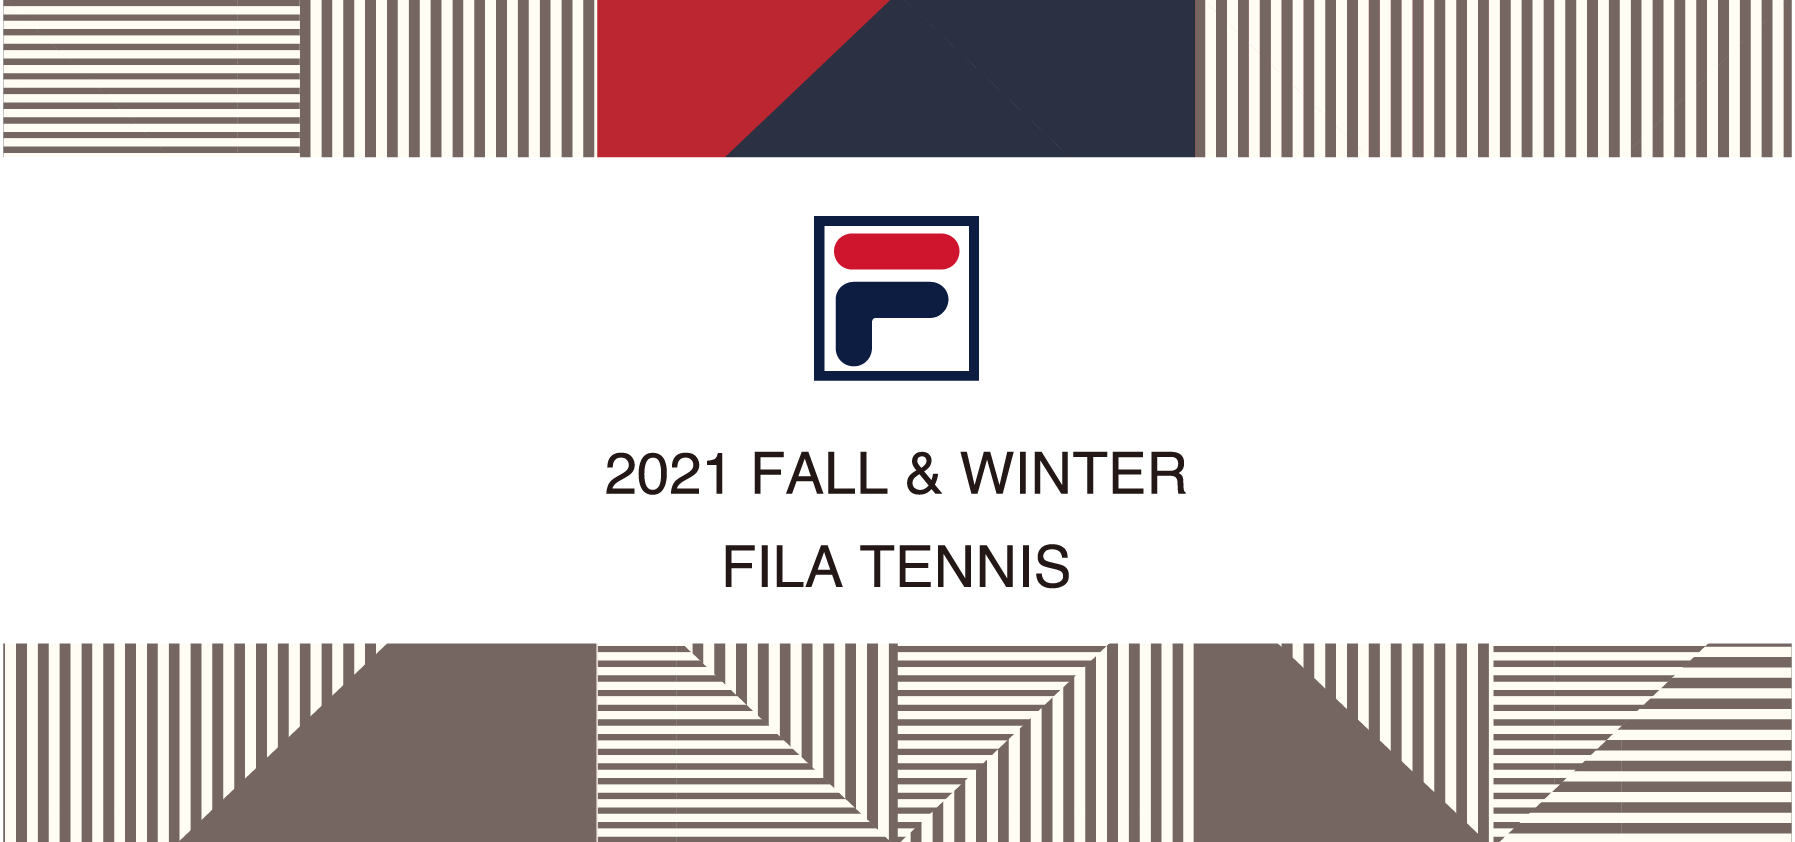 2020 FALL & WINTER FILA TENNIS